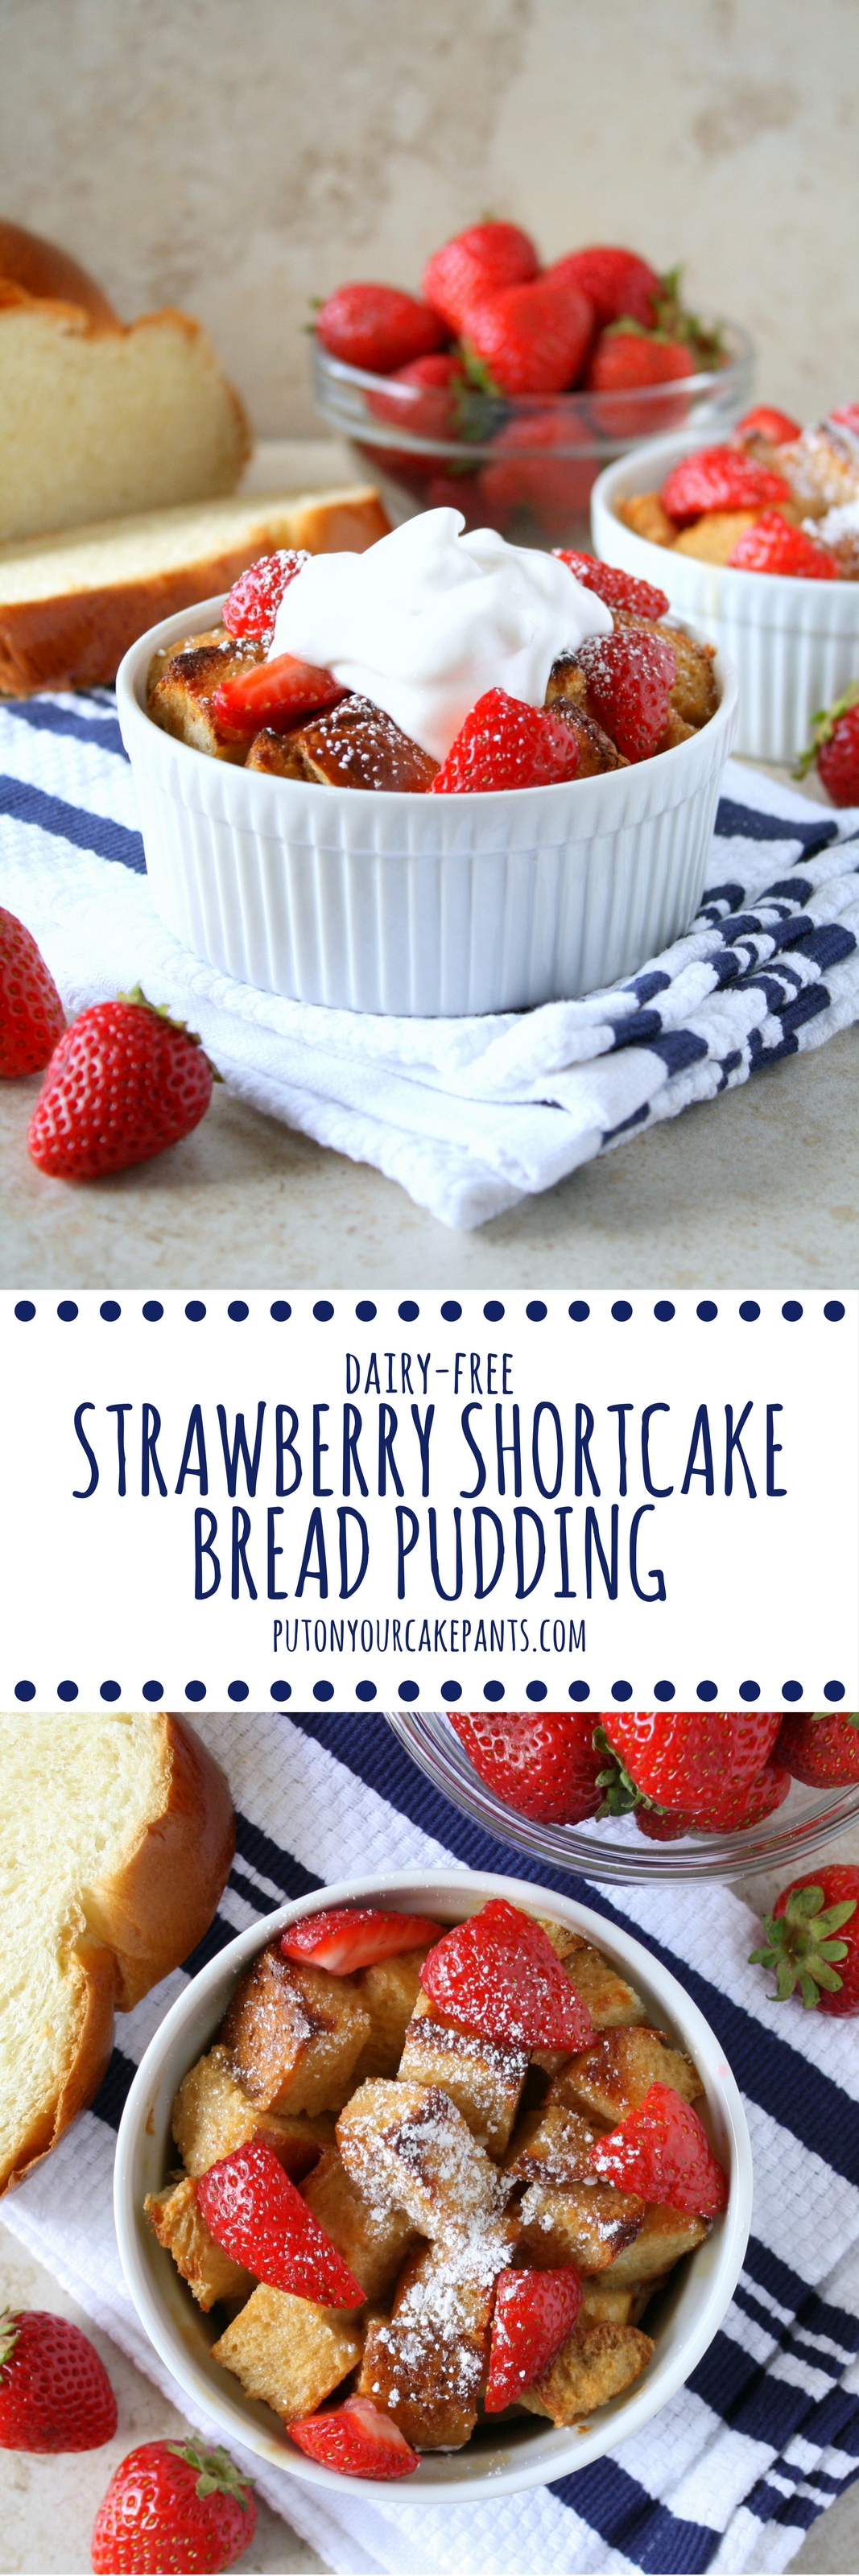 Strawberry Shortcake Bread Pudding #DairyFree4All #shop